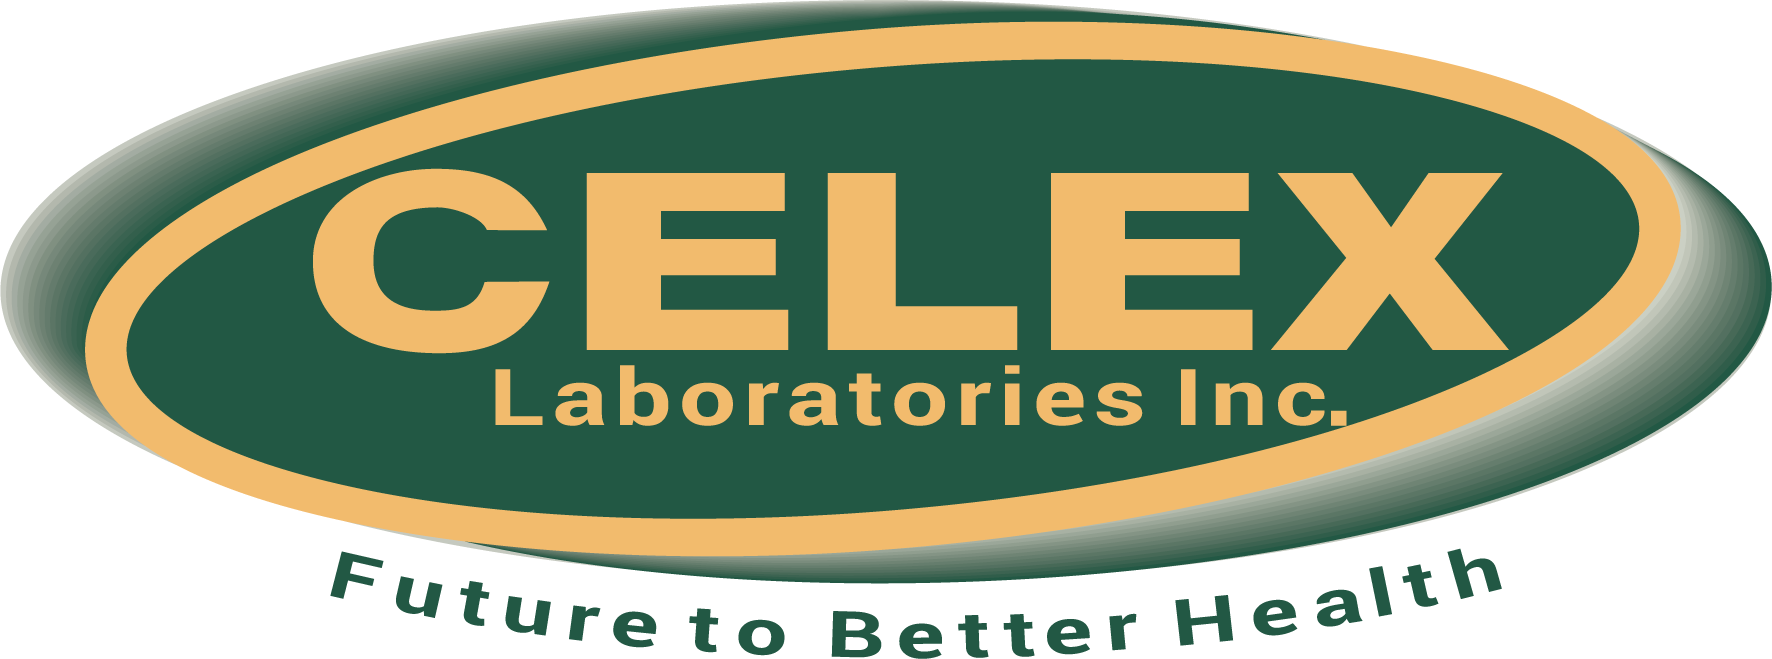 Celex Laboratories Inc.